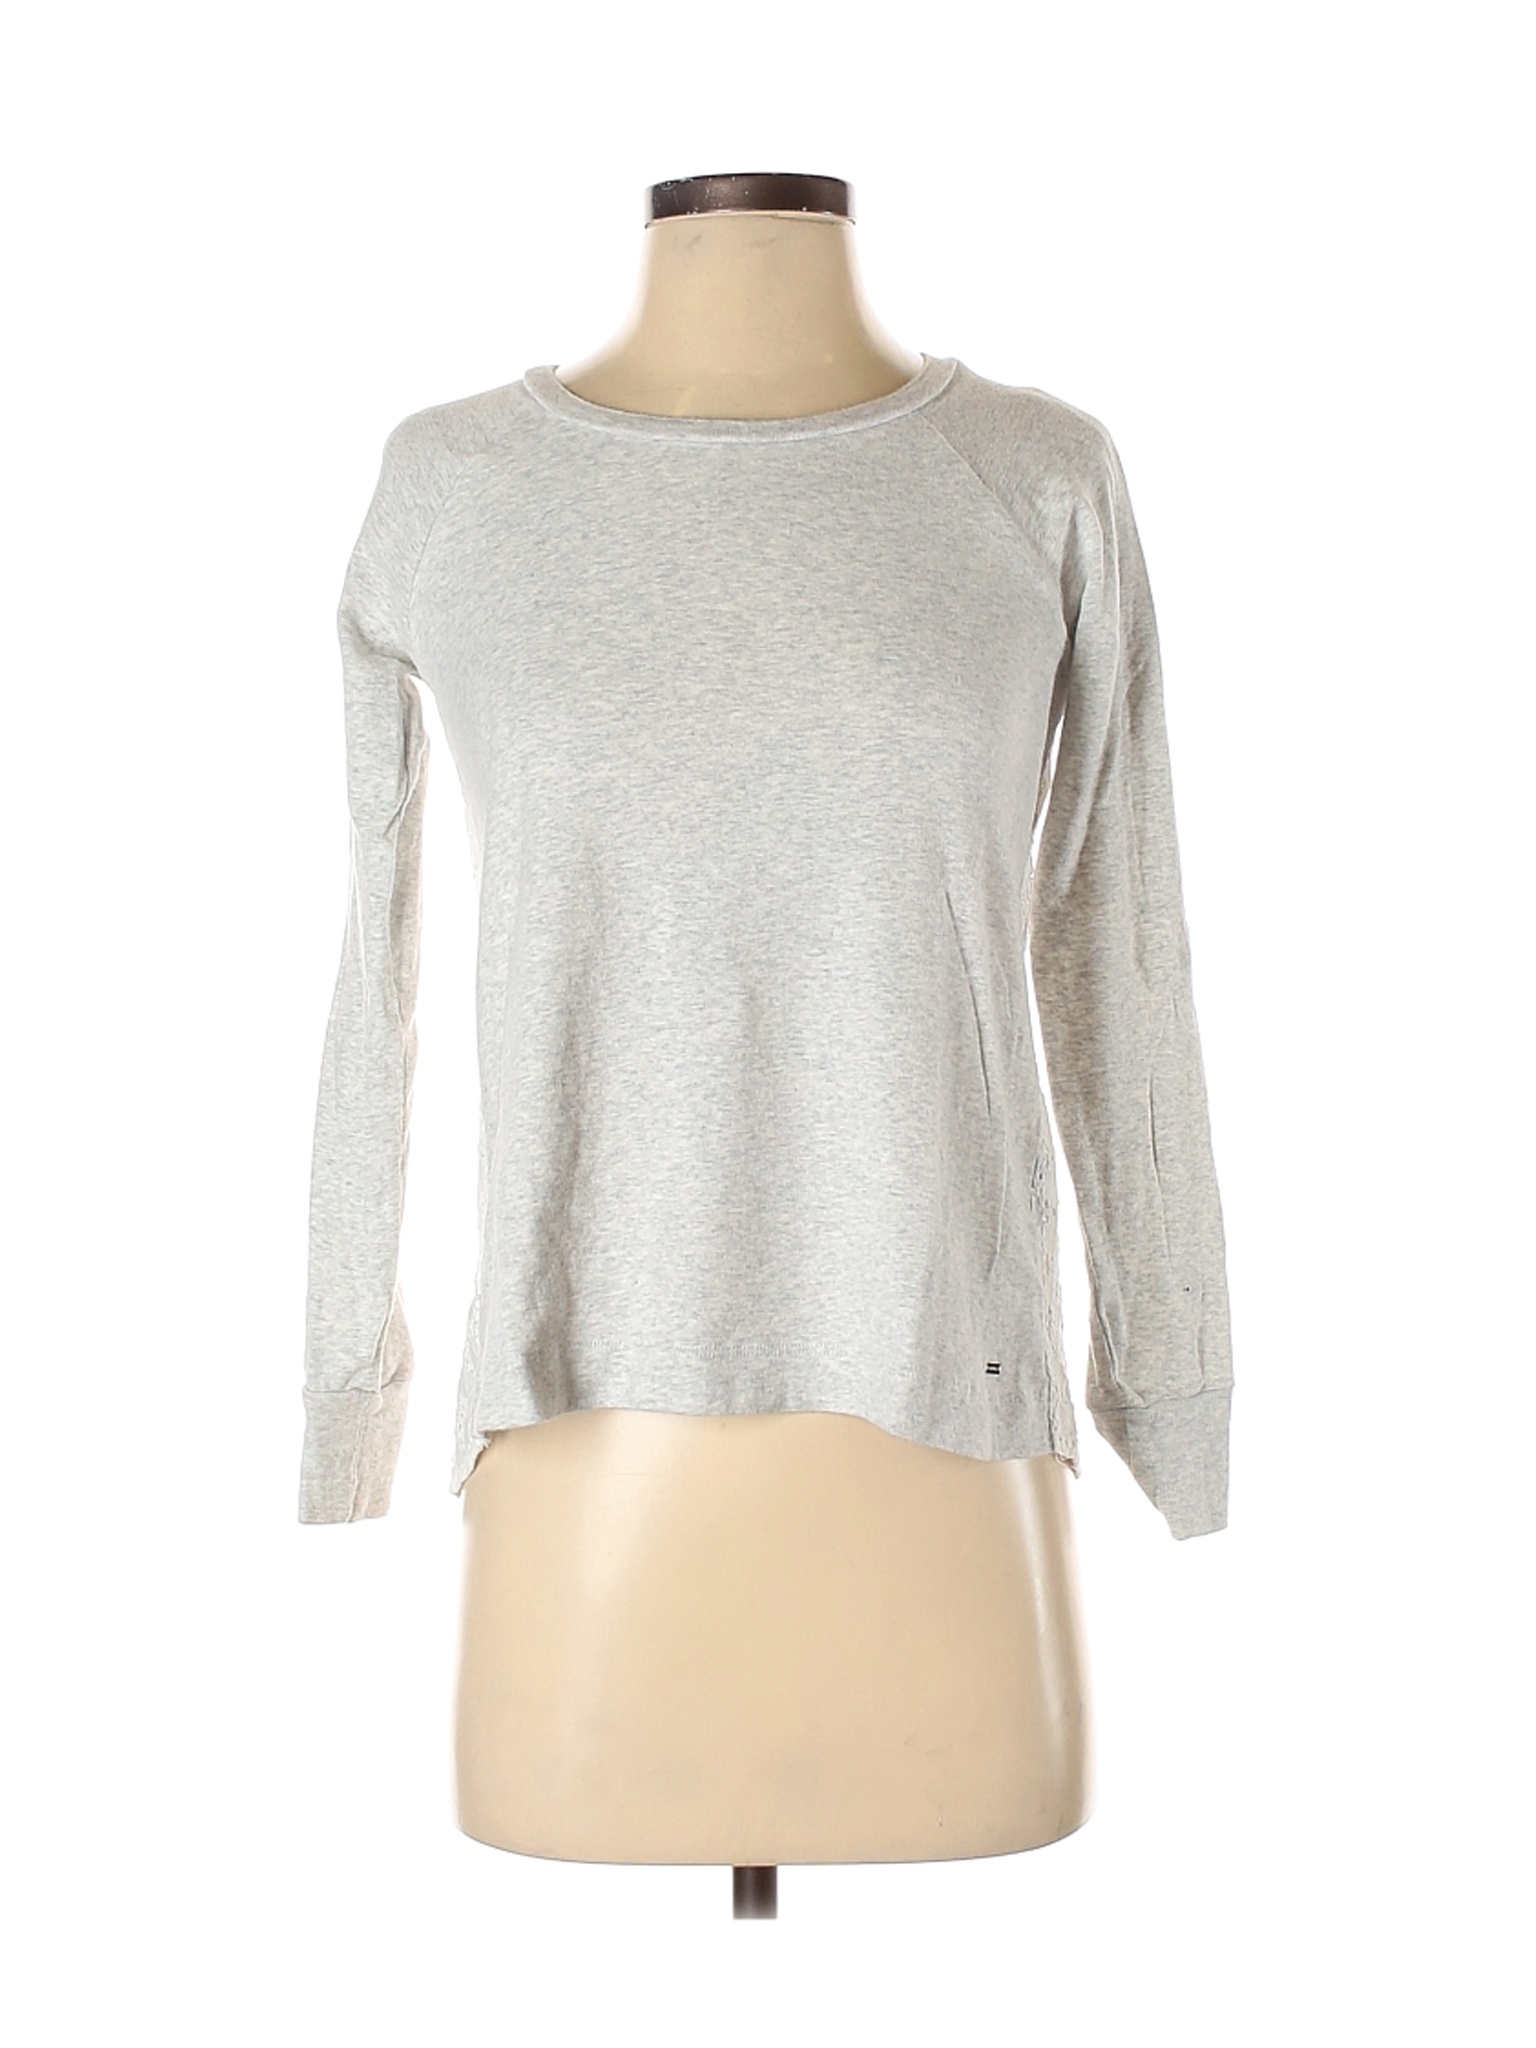 Tommy Hilfiger Women Gray Pullover Sweater XS | eBay